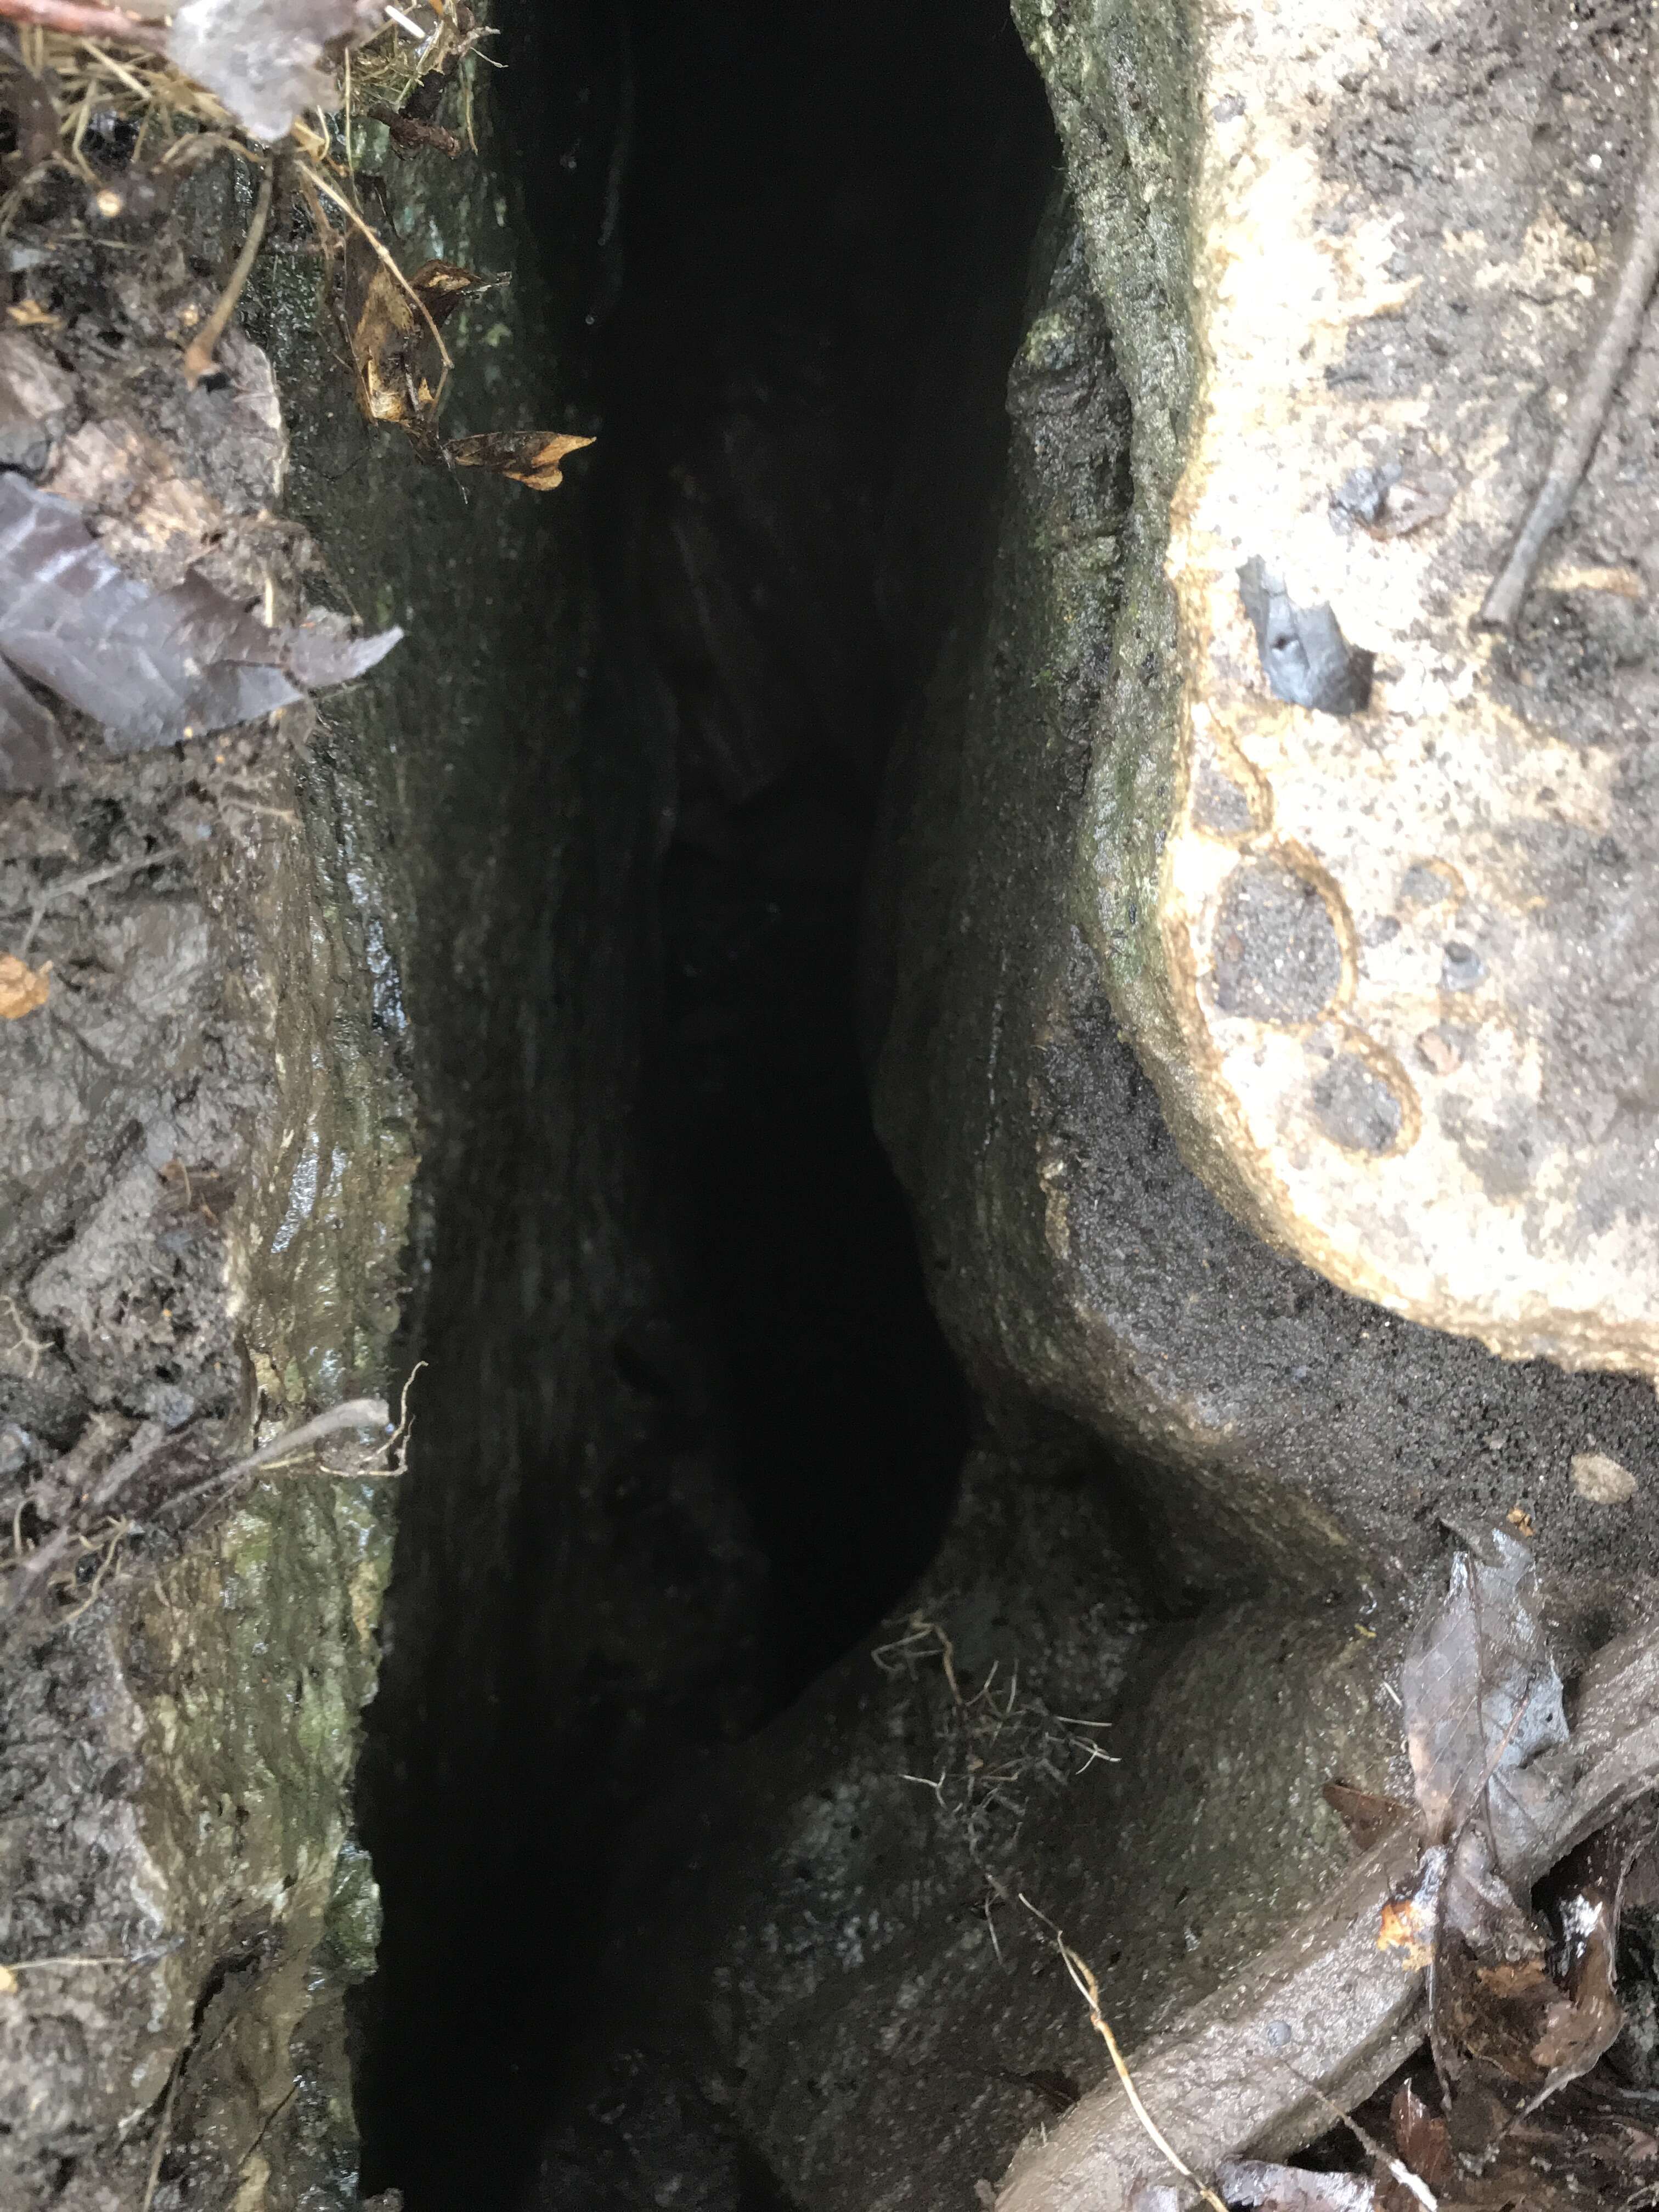 Hole in ground between rocks